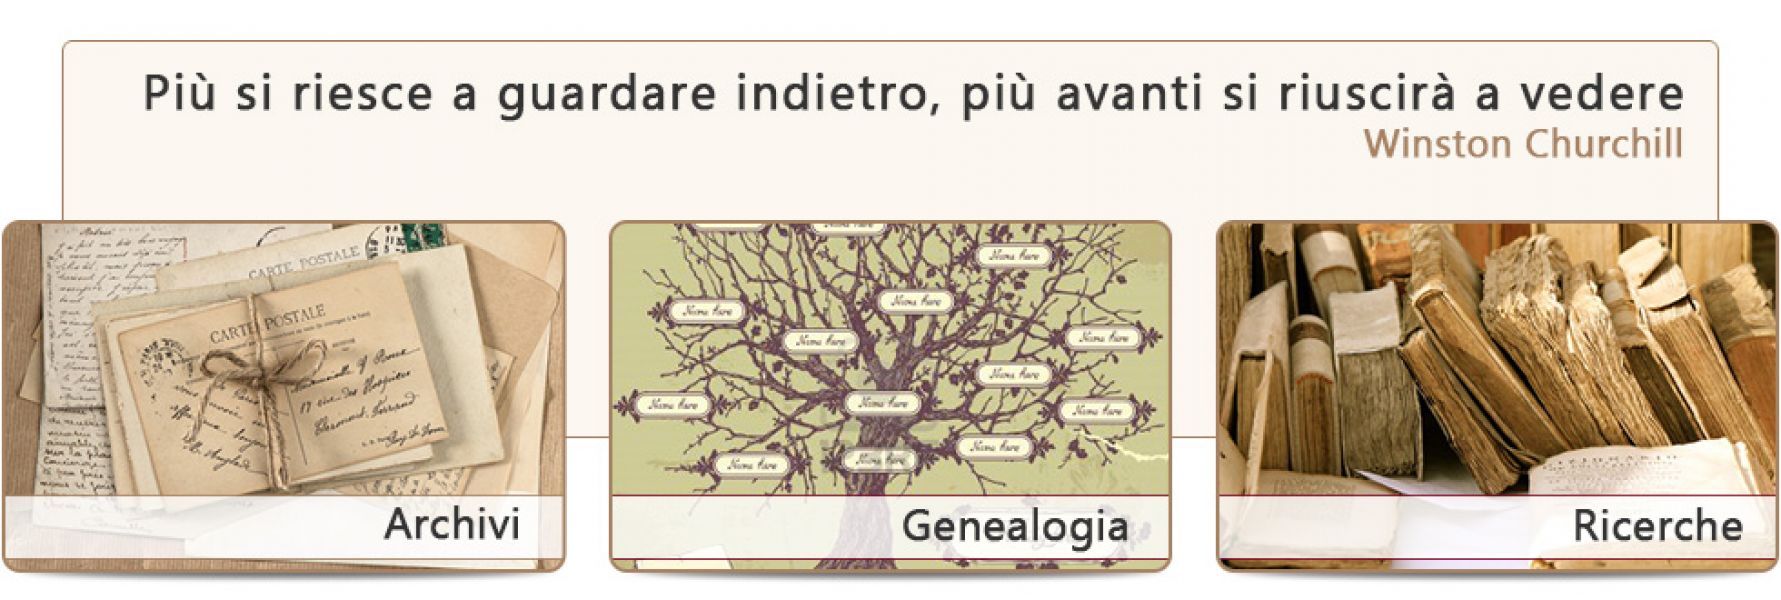 Ricerche genealogiche